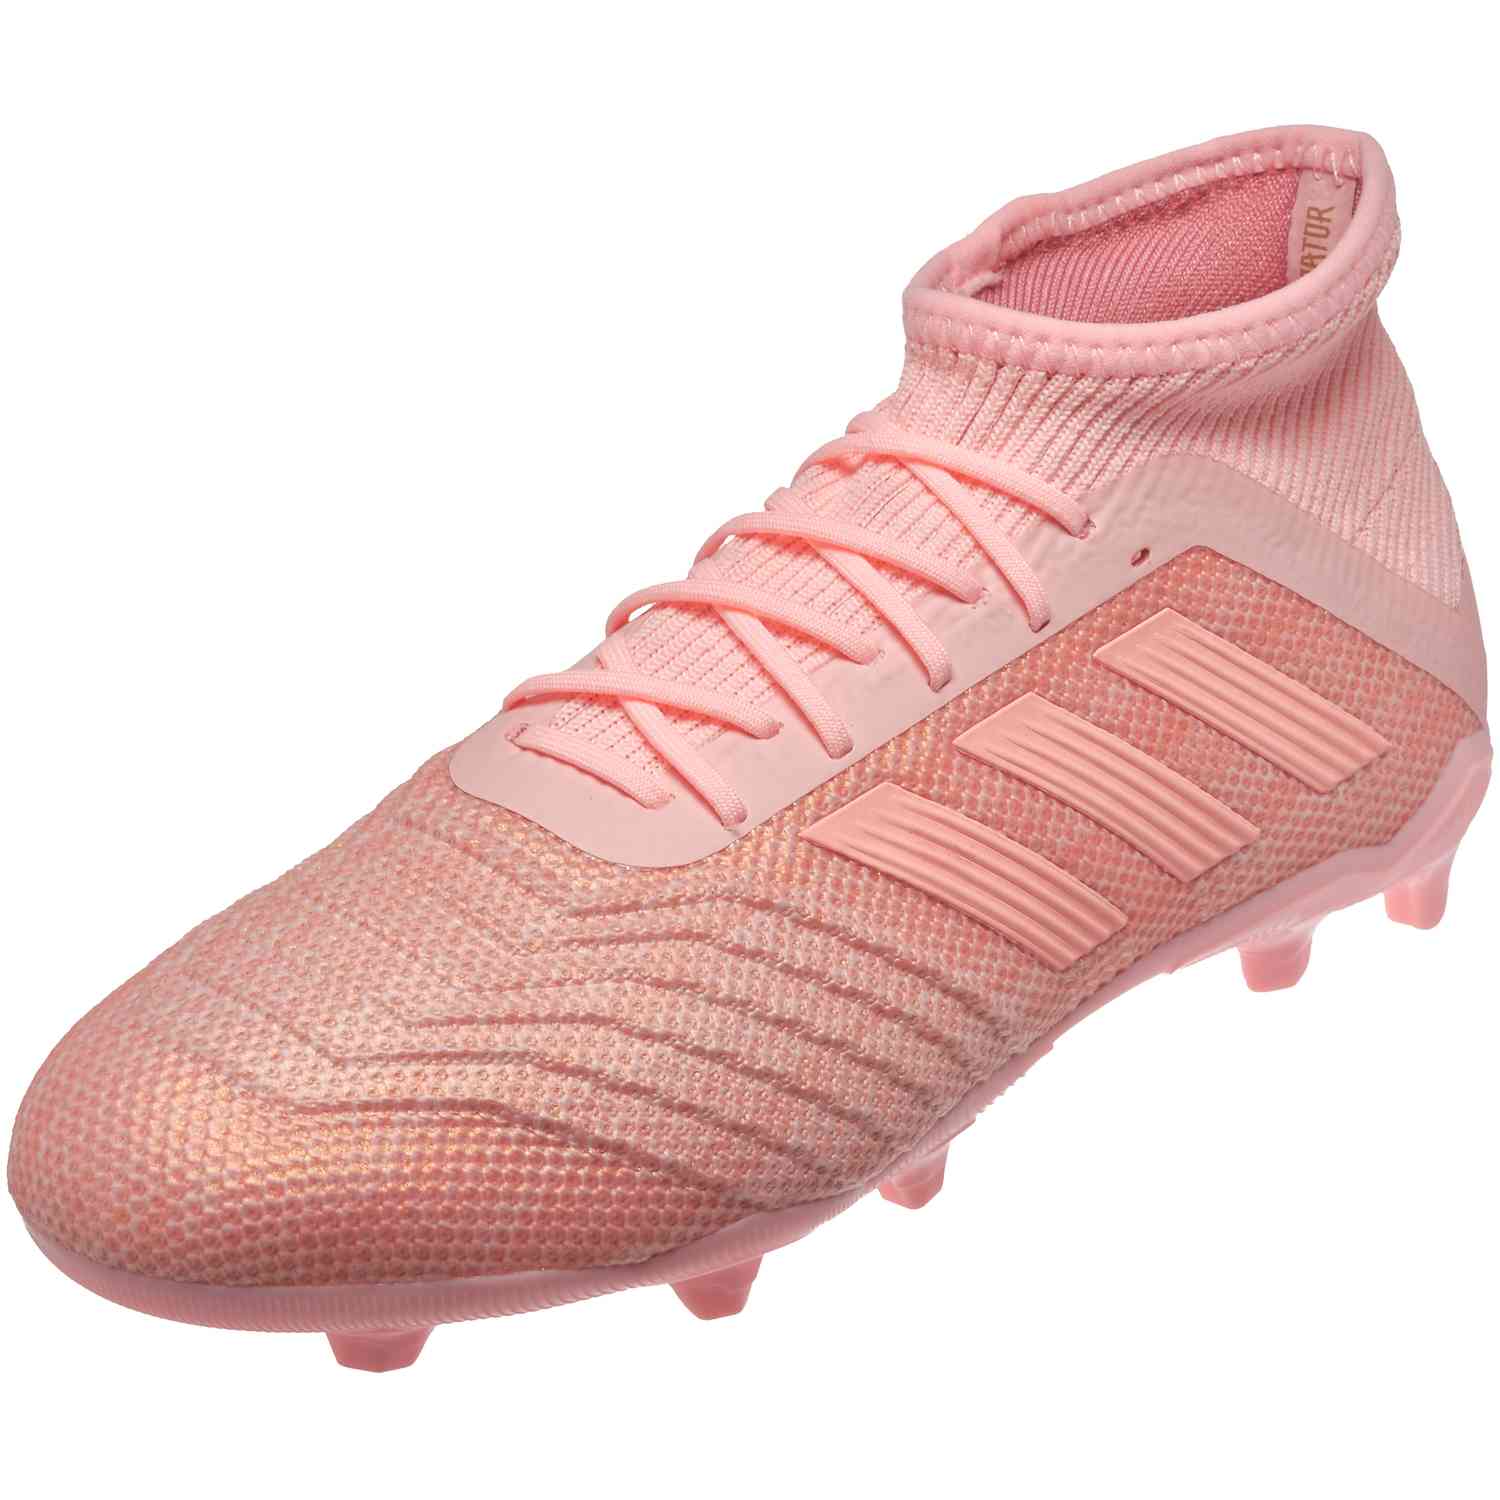 pink adidas predator 18.1